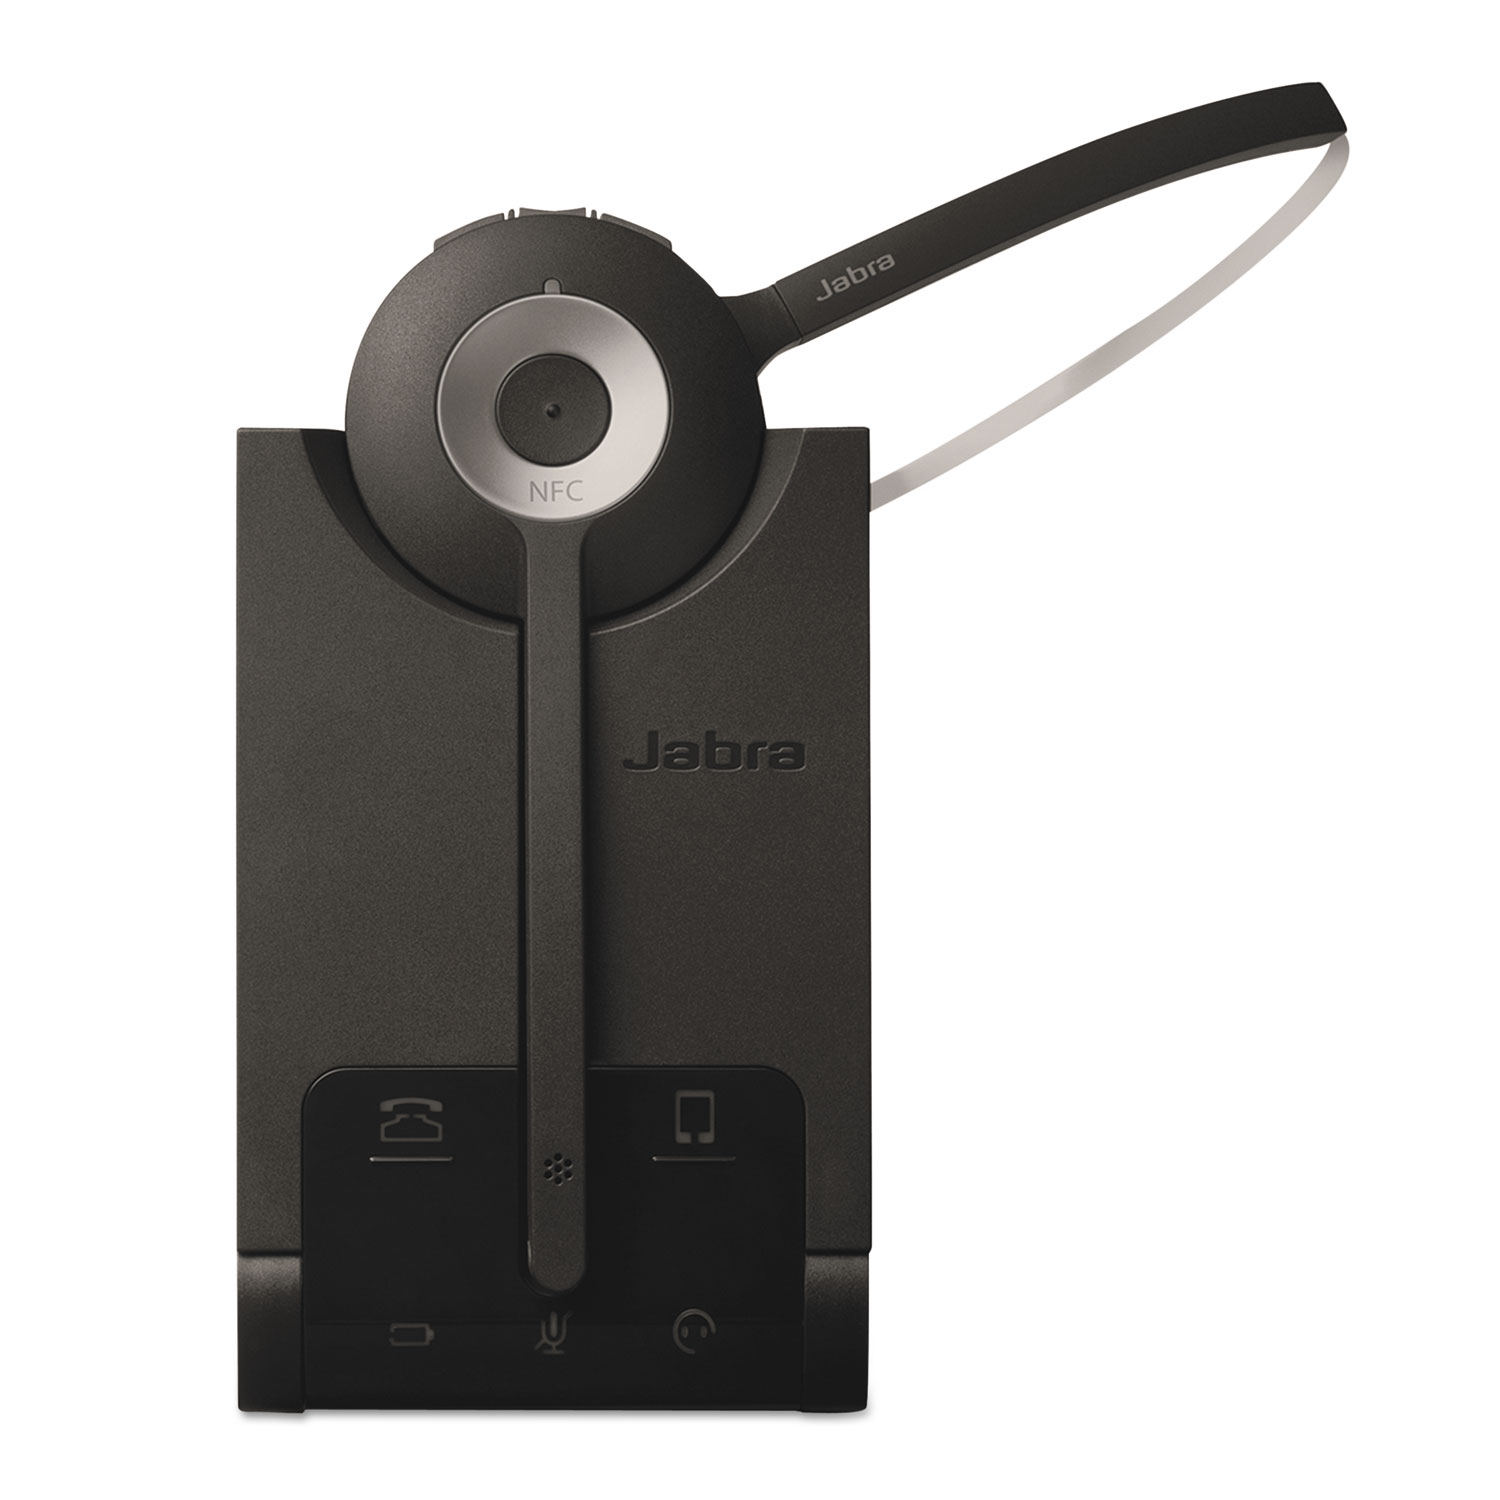  Jabra 925-15-508-205 PRO 925 Wireless Monaural Convertible Headset (JBR92515508205) 